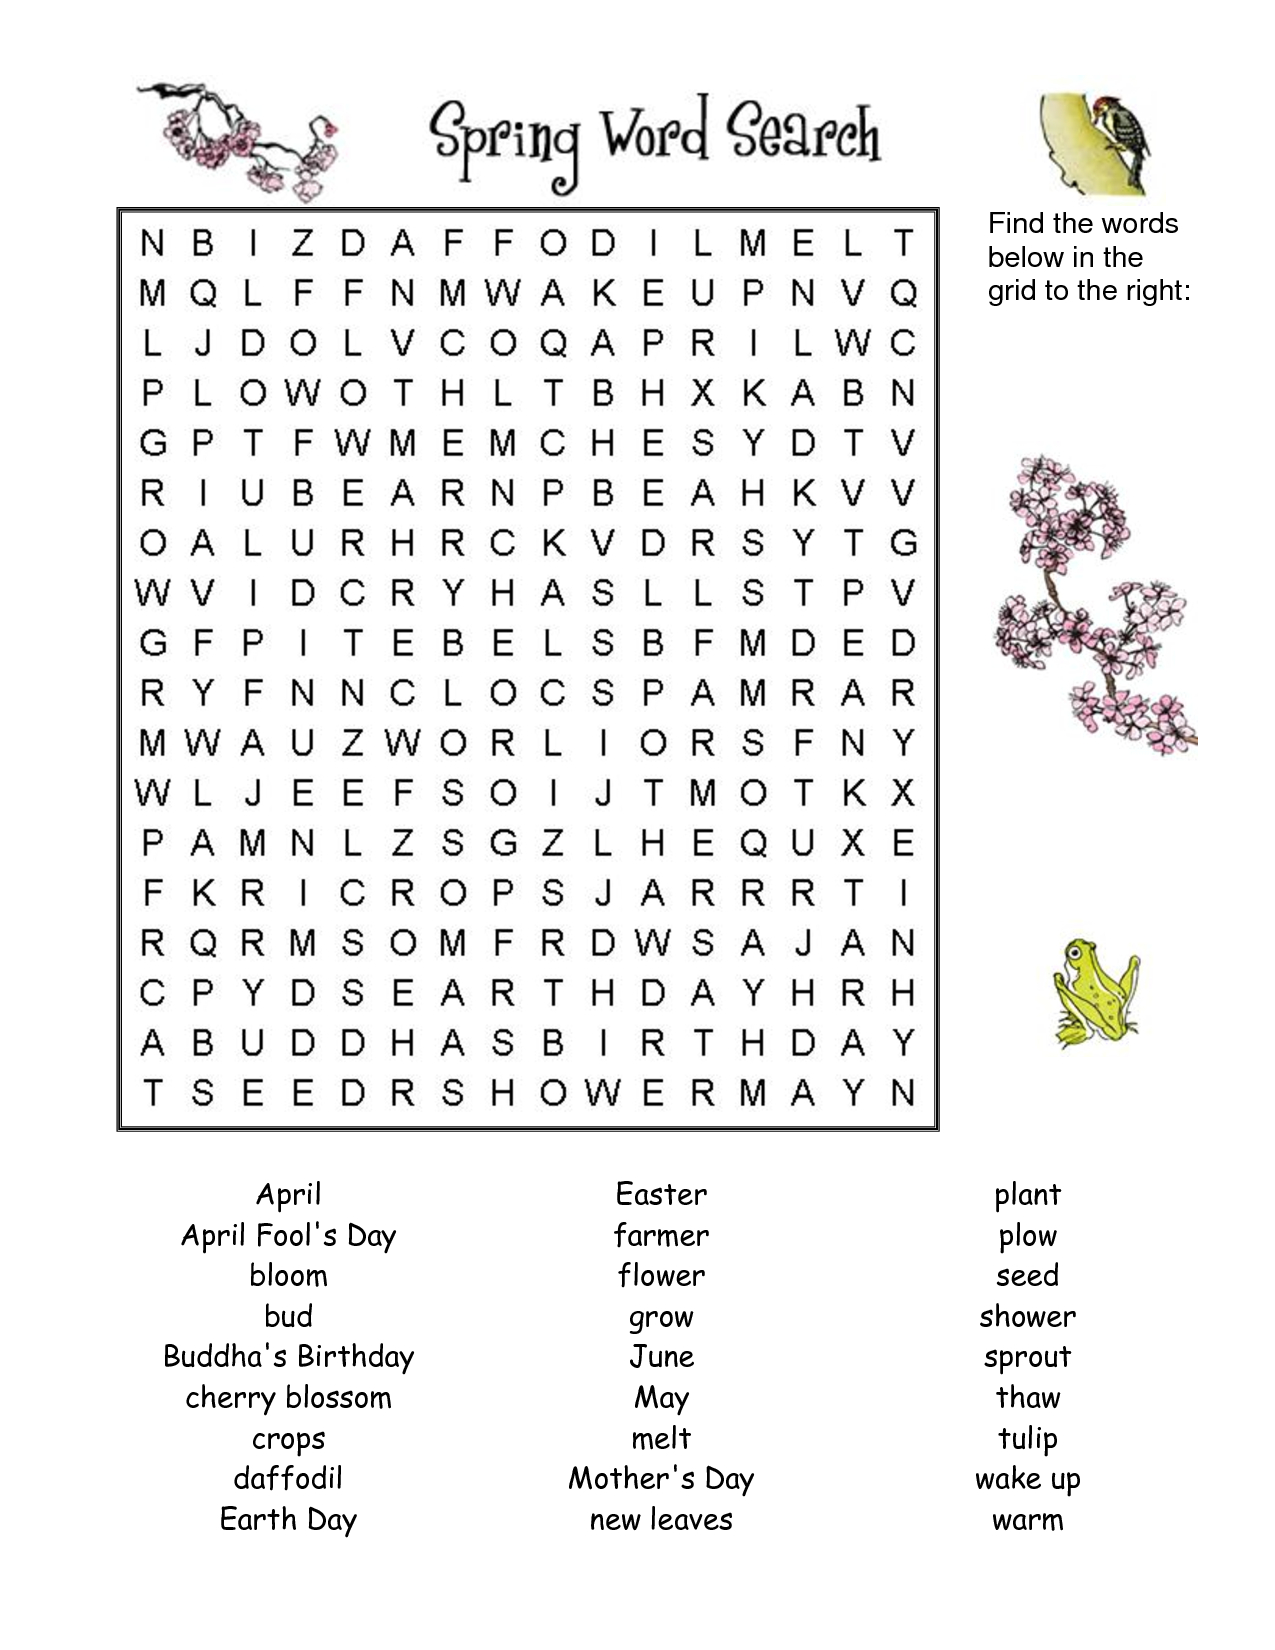 Spring Word Search Printable Postedryan Simpson